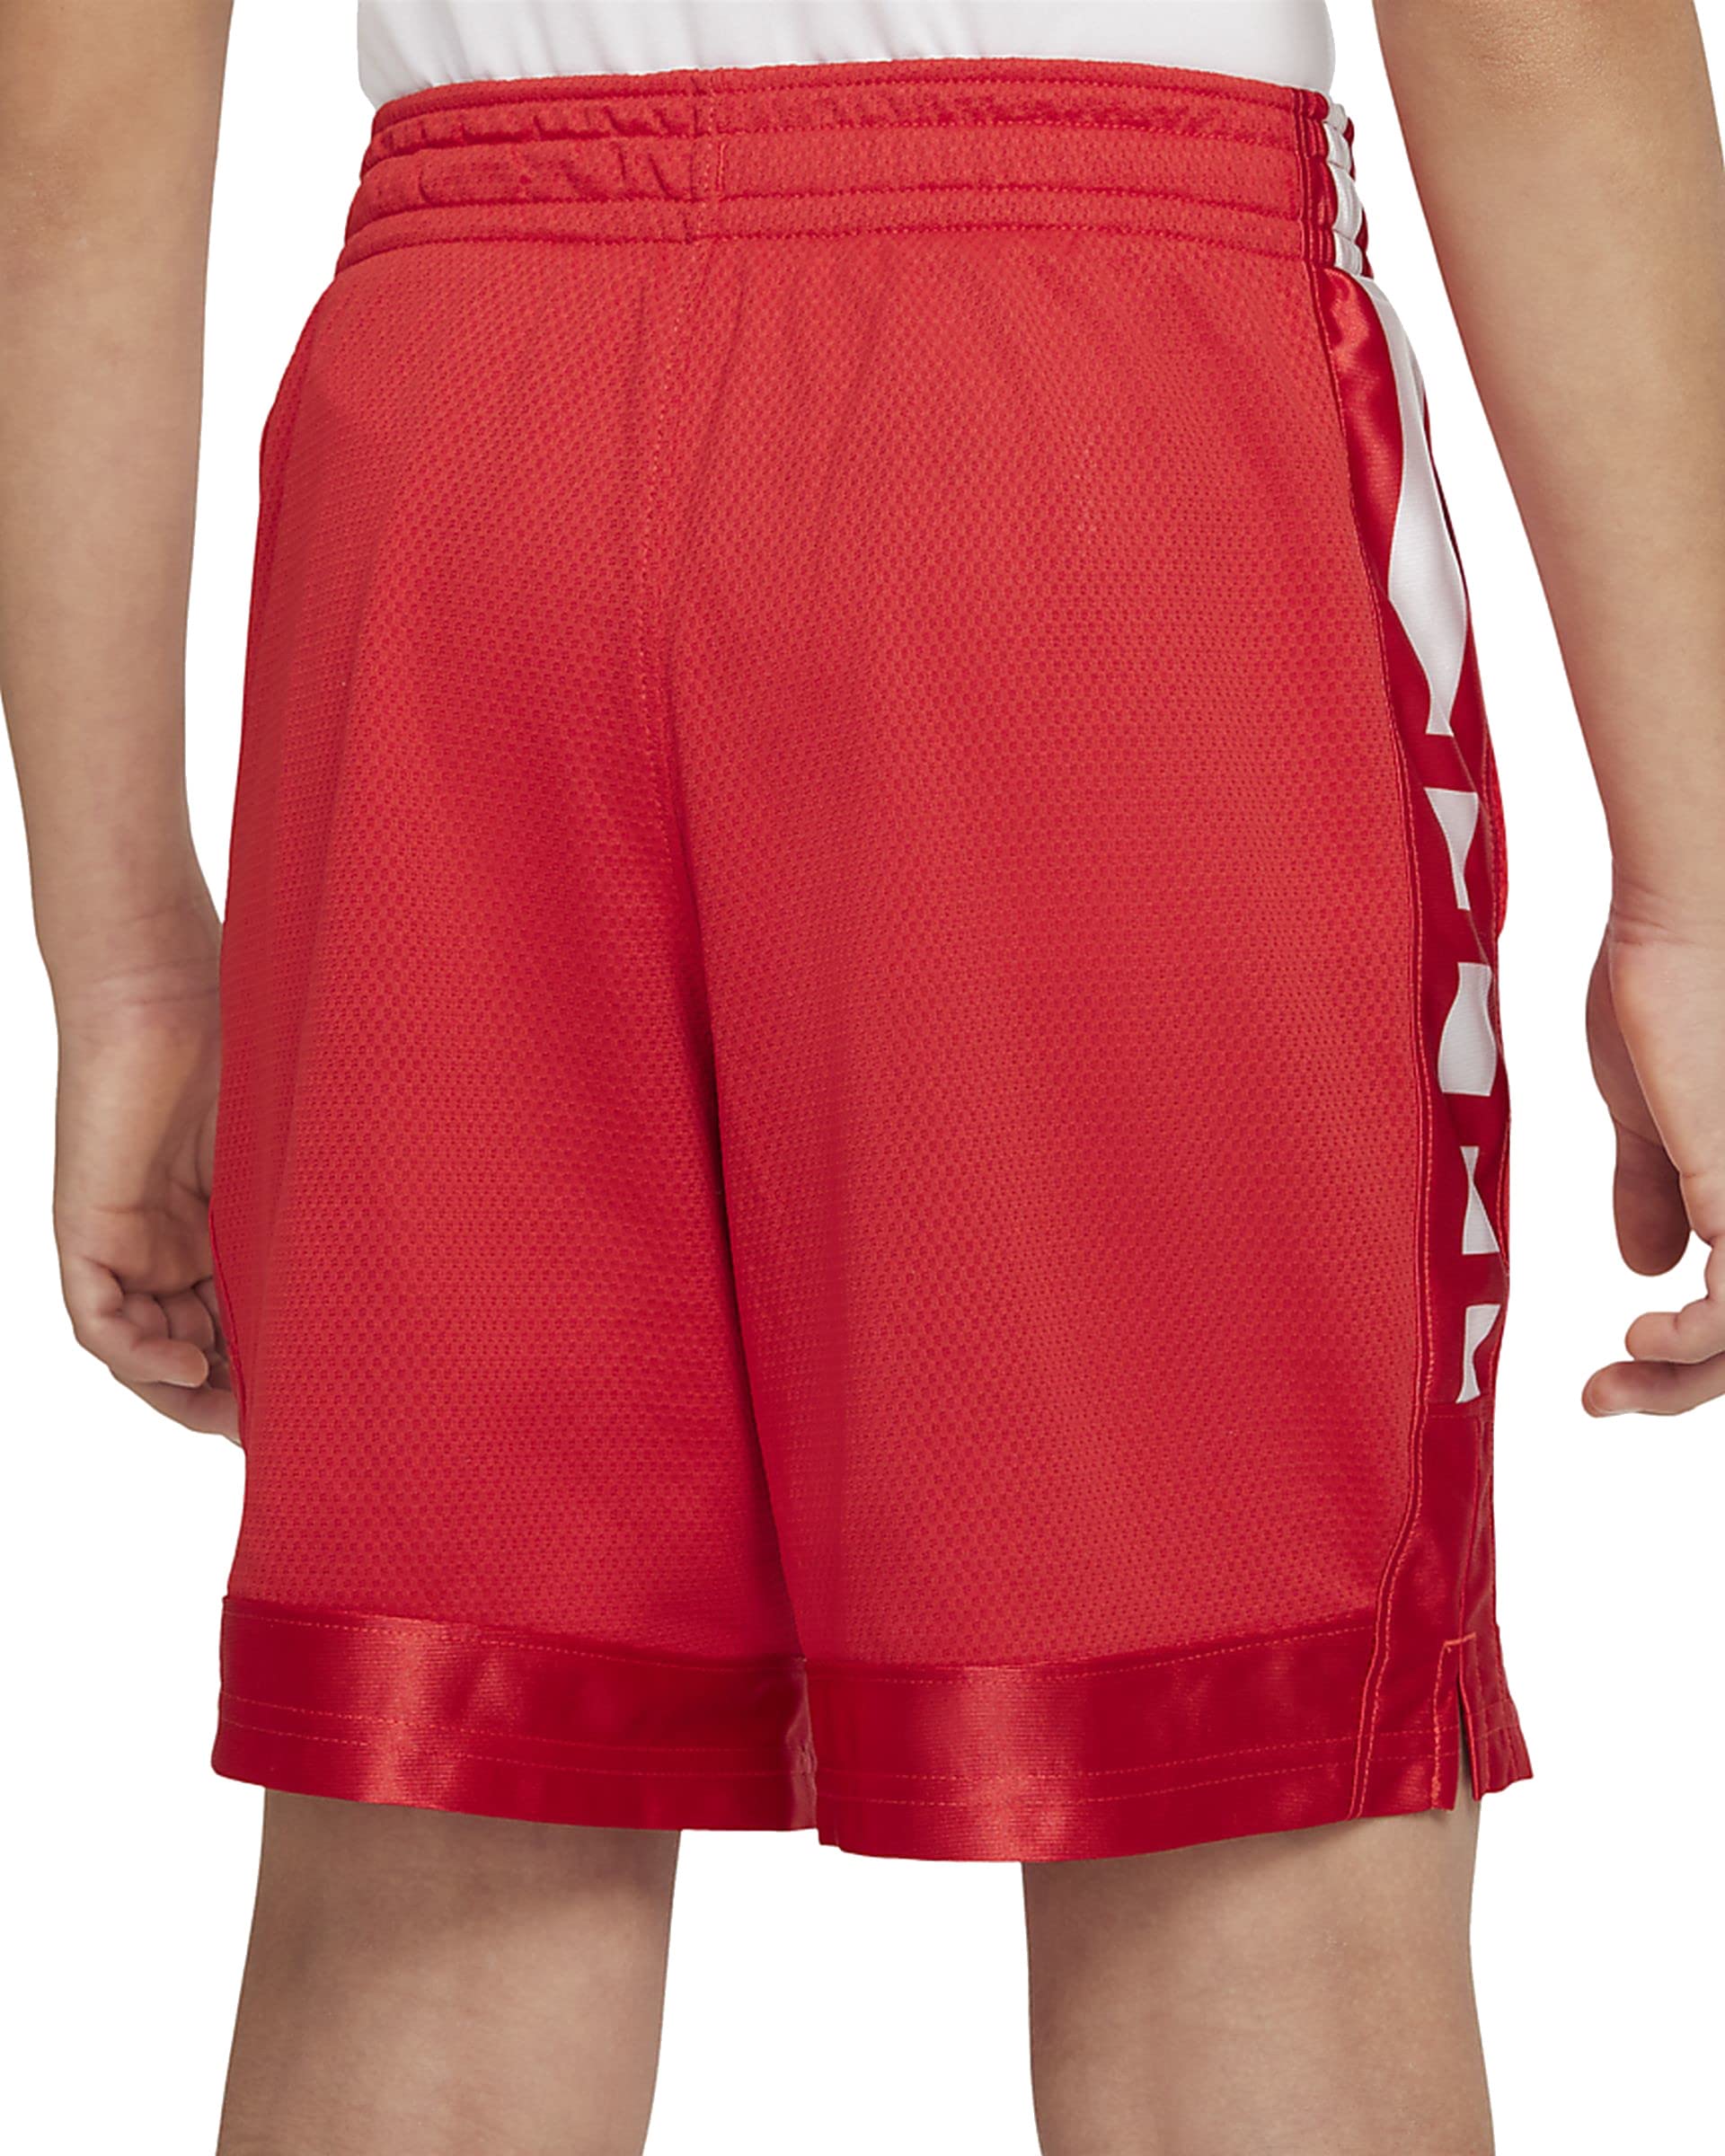 Nike Boy's Dry Shorts Elite Stripe (Little Kids/Big Kids)